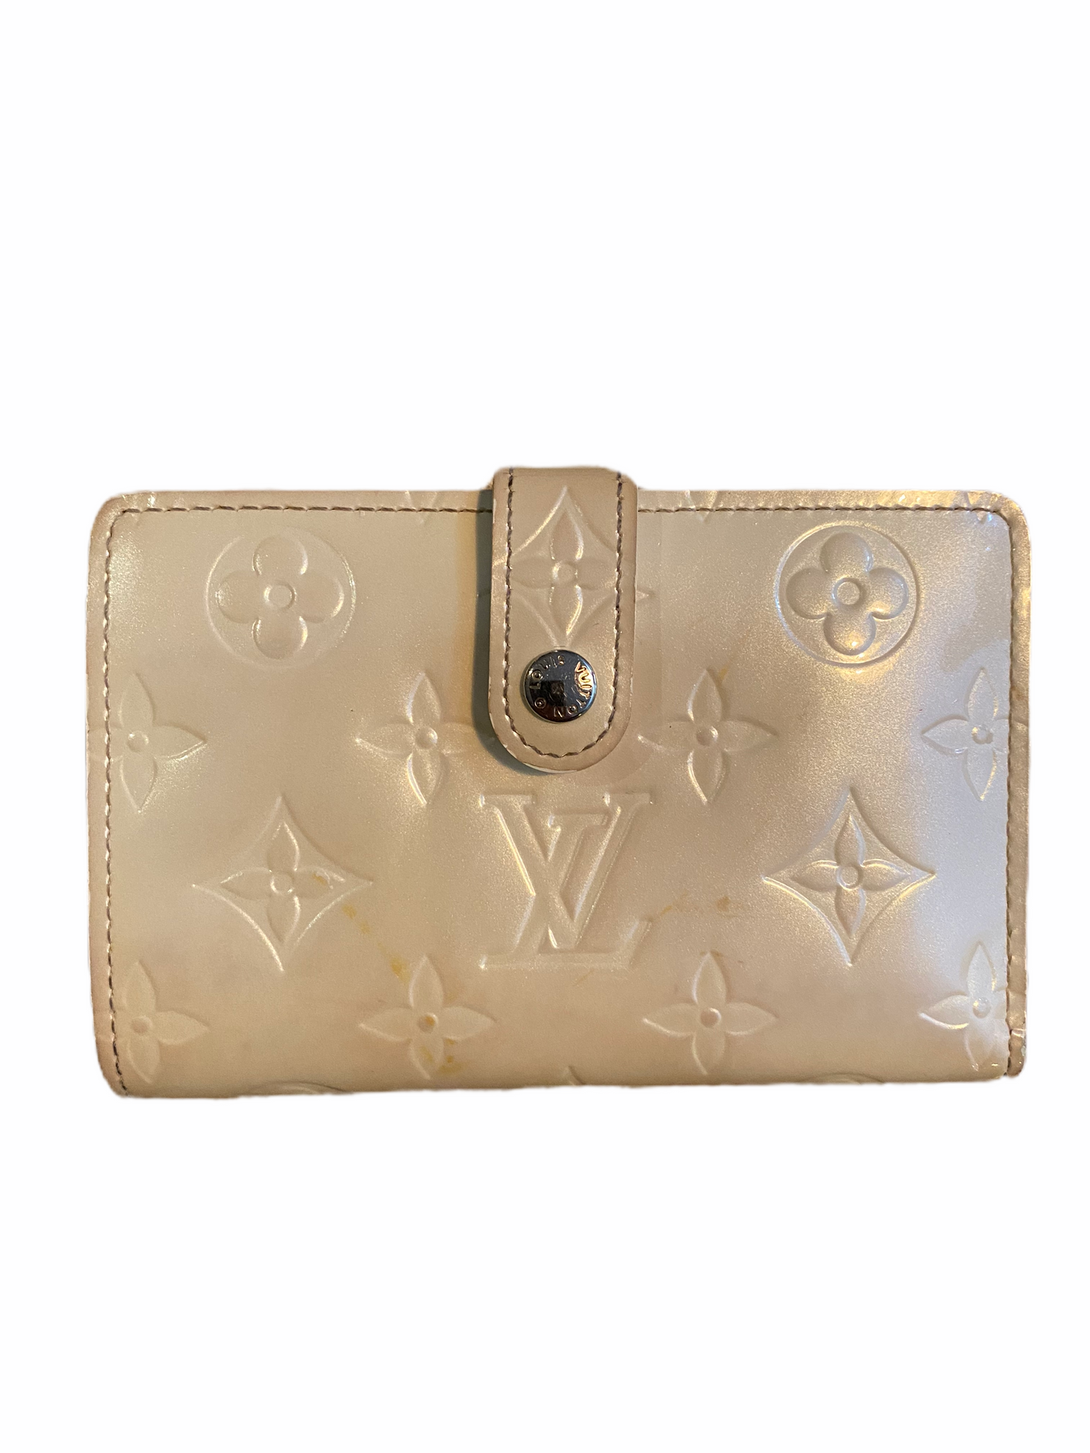 Louis Vuitton Cream Vernis Wallet - As Seen on Instagram - Siopaella Designer Exchange